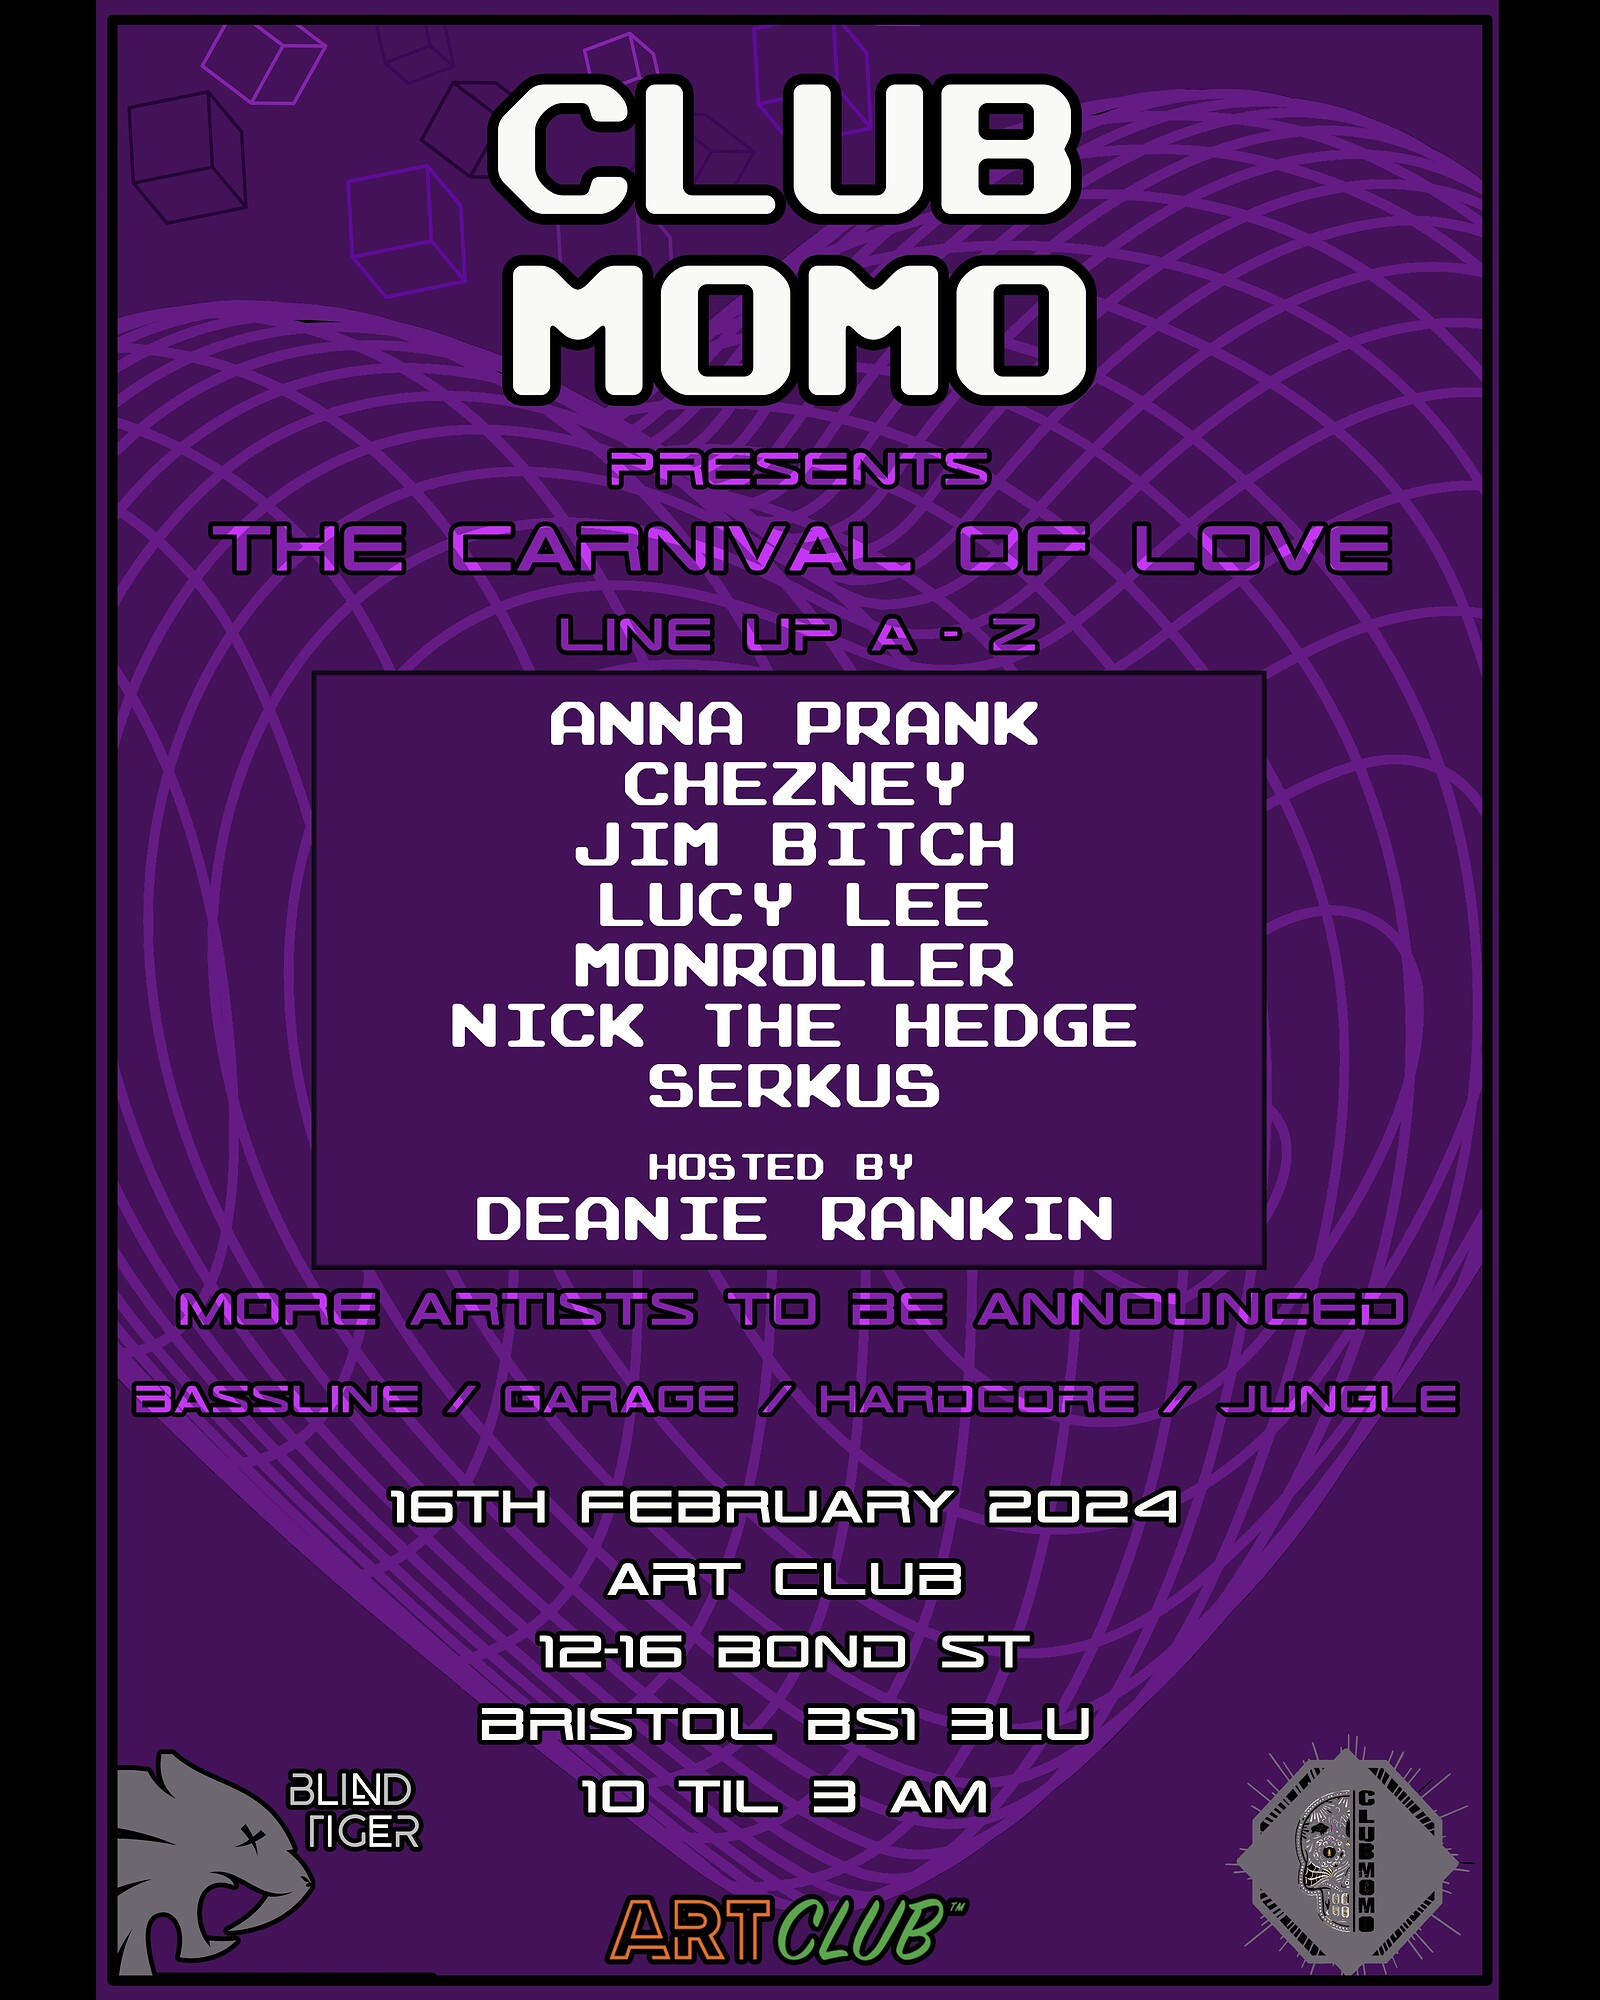 Club Momo presents Carnival of Love at Art Club